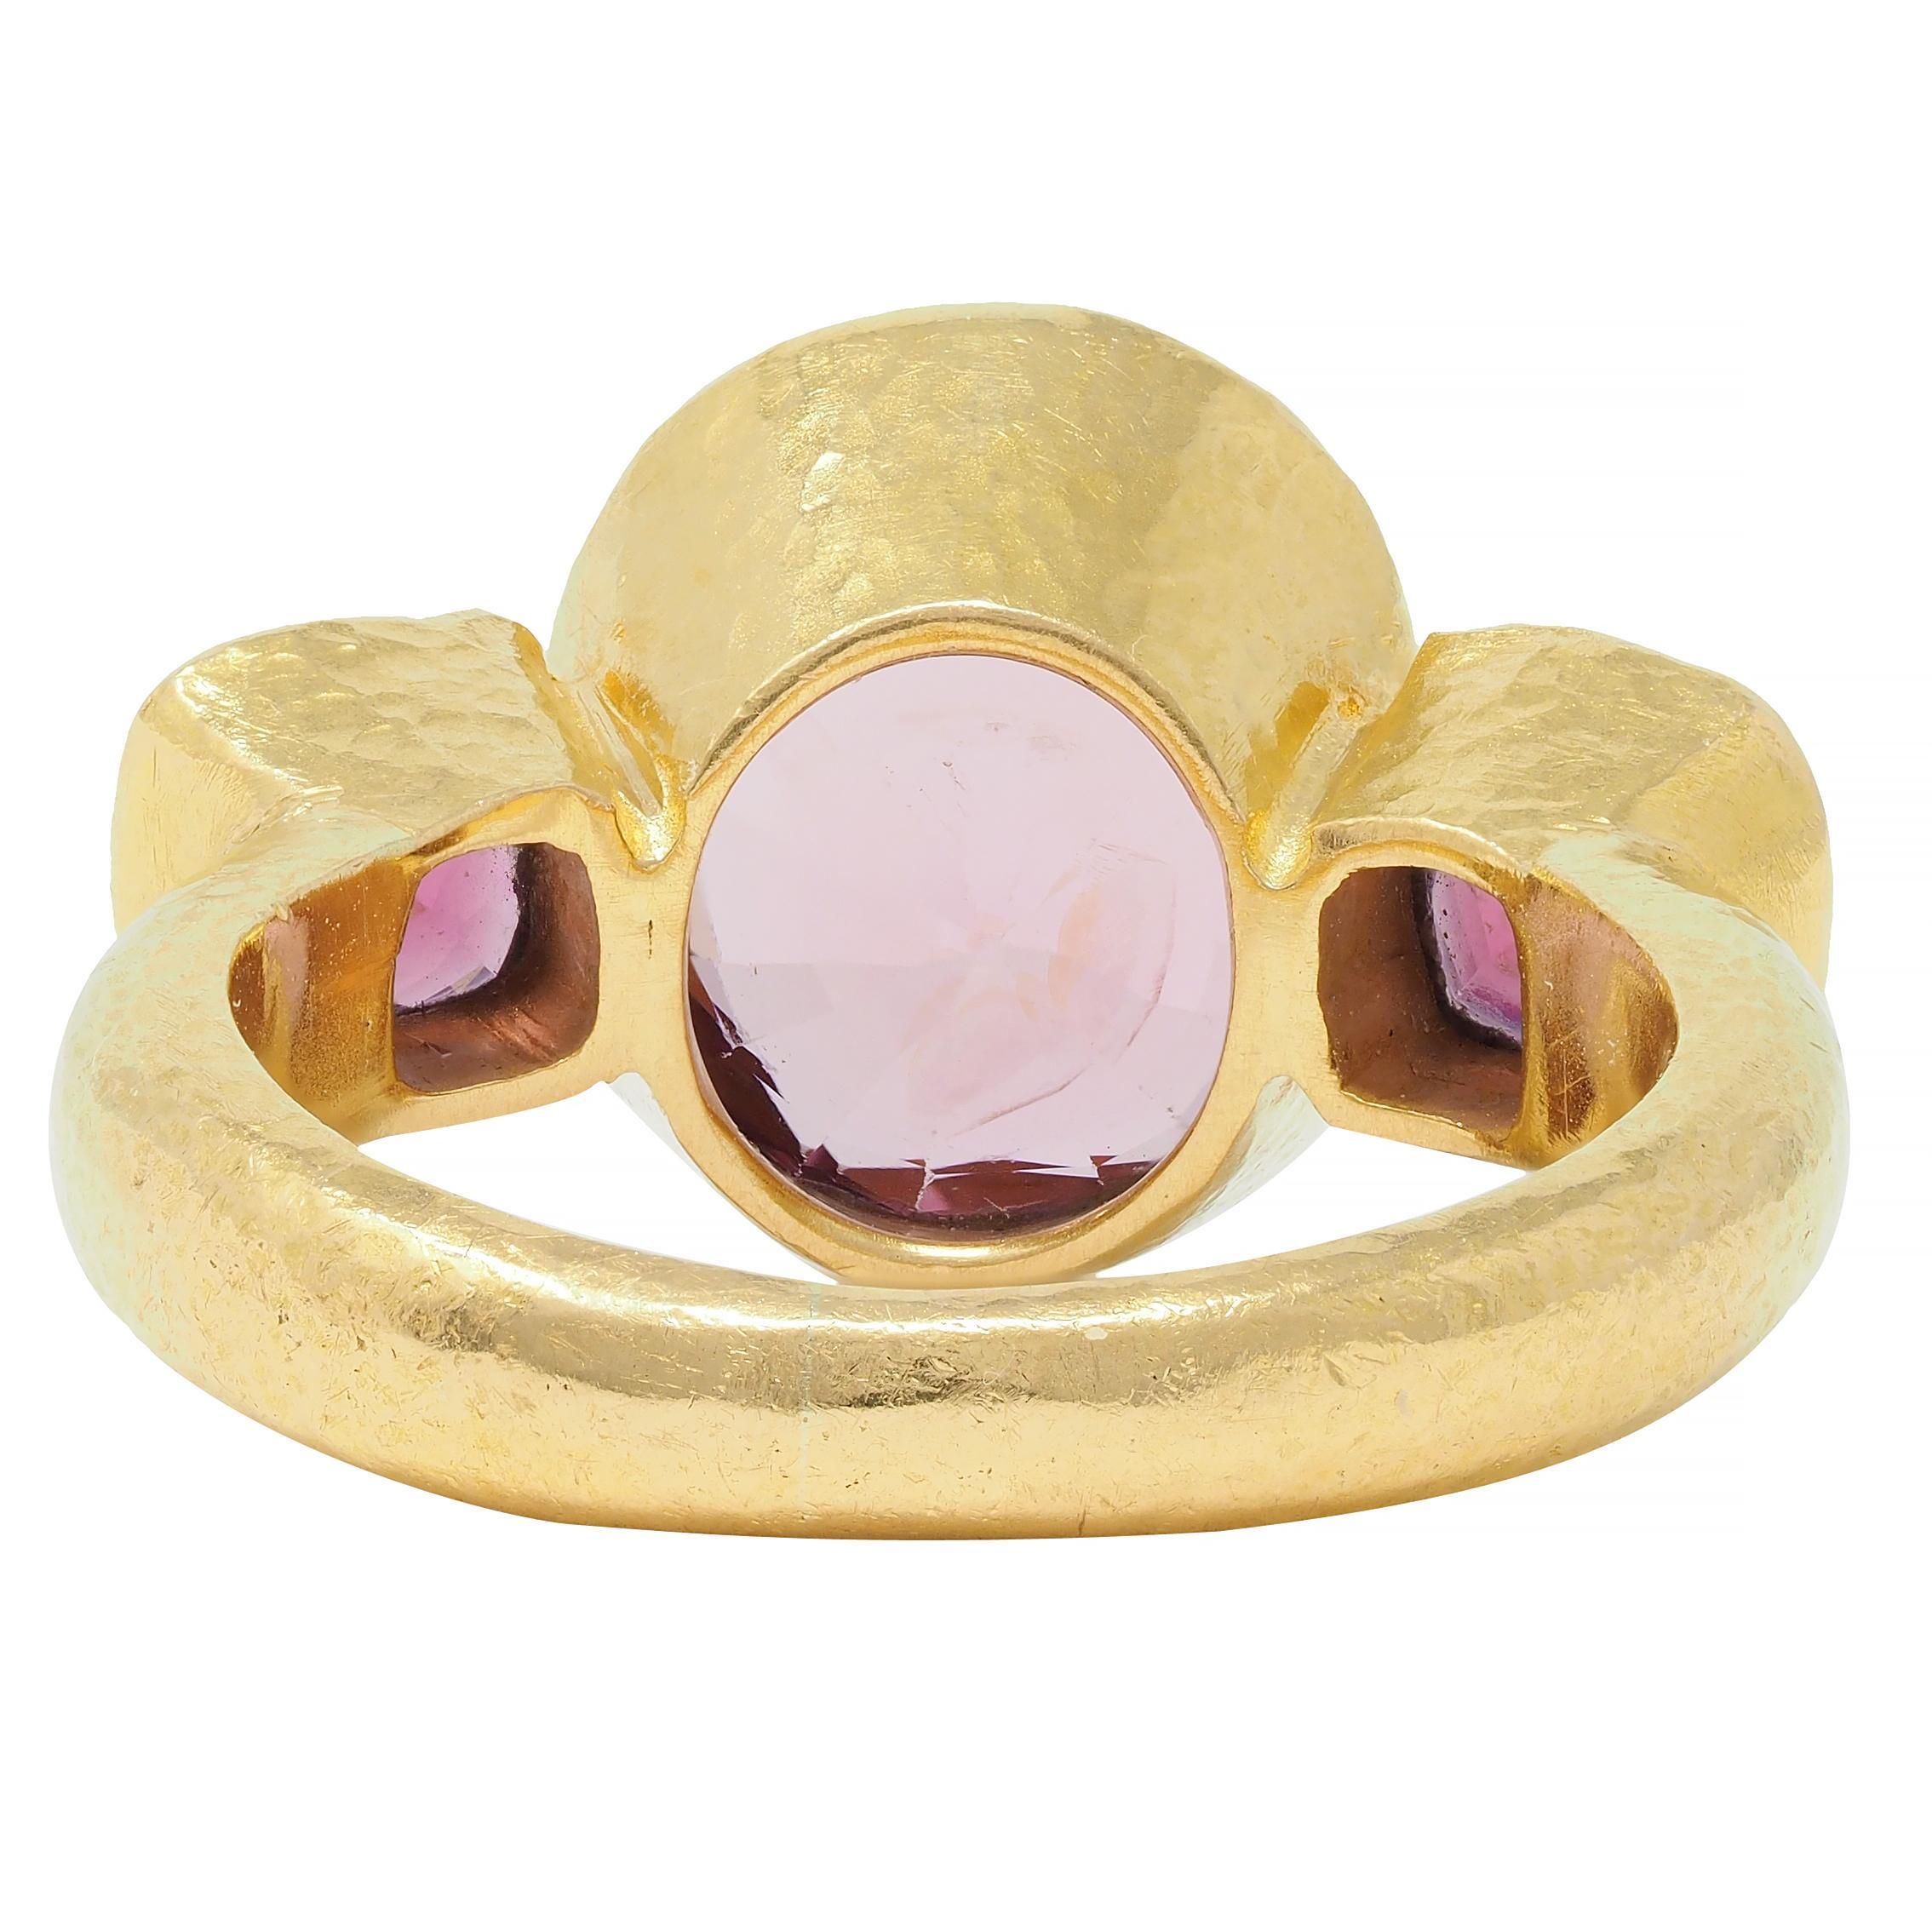 Elizabeth Locke Spinel Rhodolite Garnet 19 Karat Hammered Gold Gemstone Ring In Excellent Condition For Sale In Philadelphia, PA